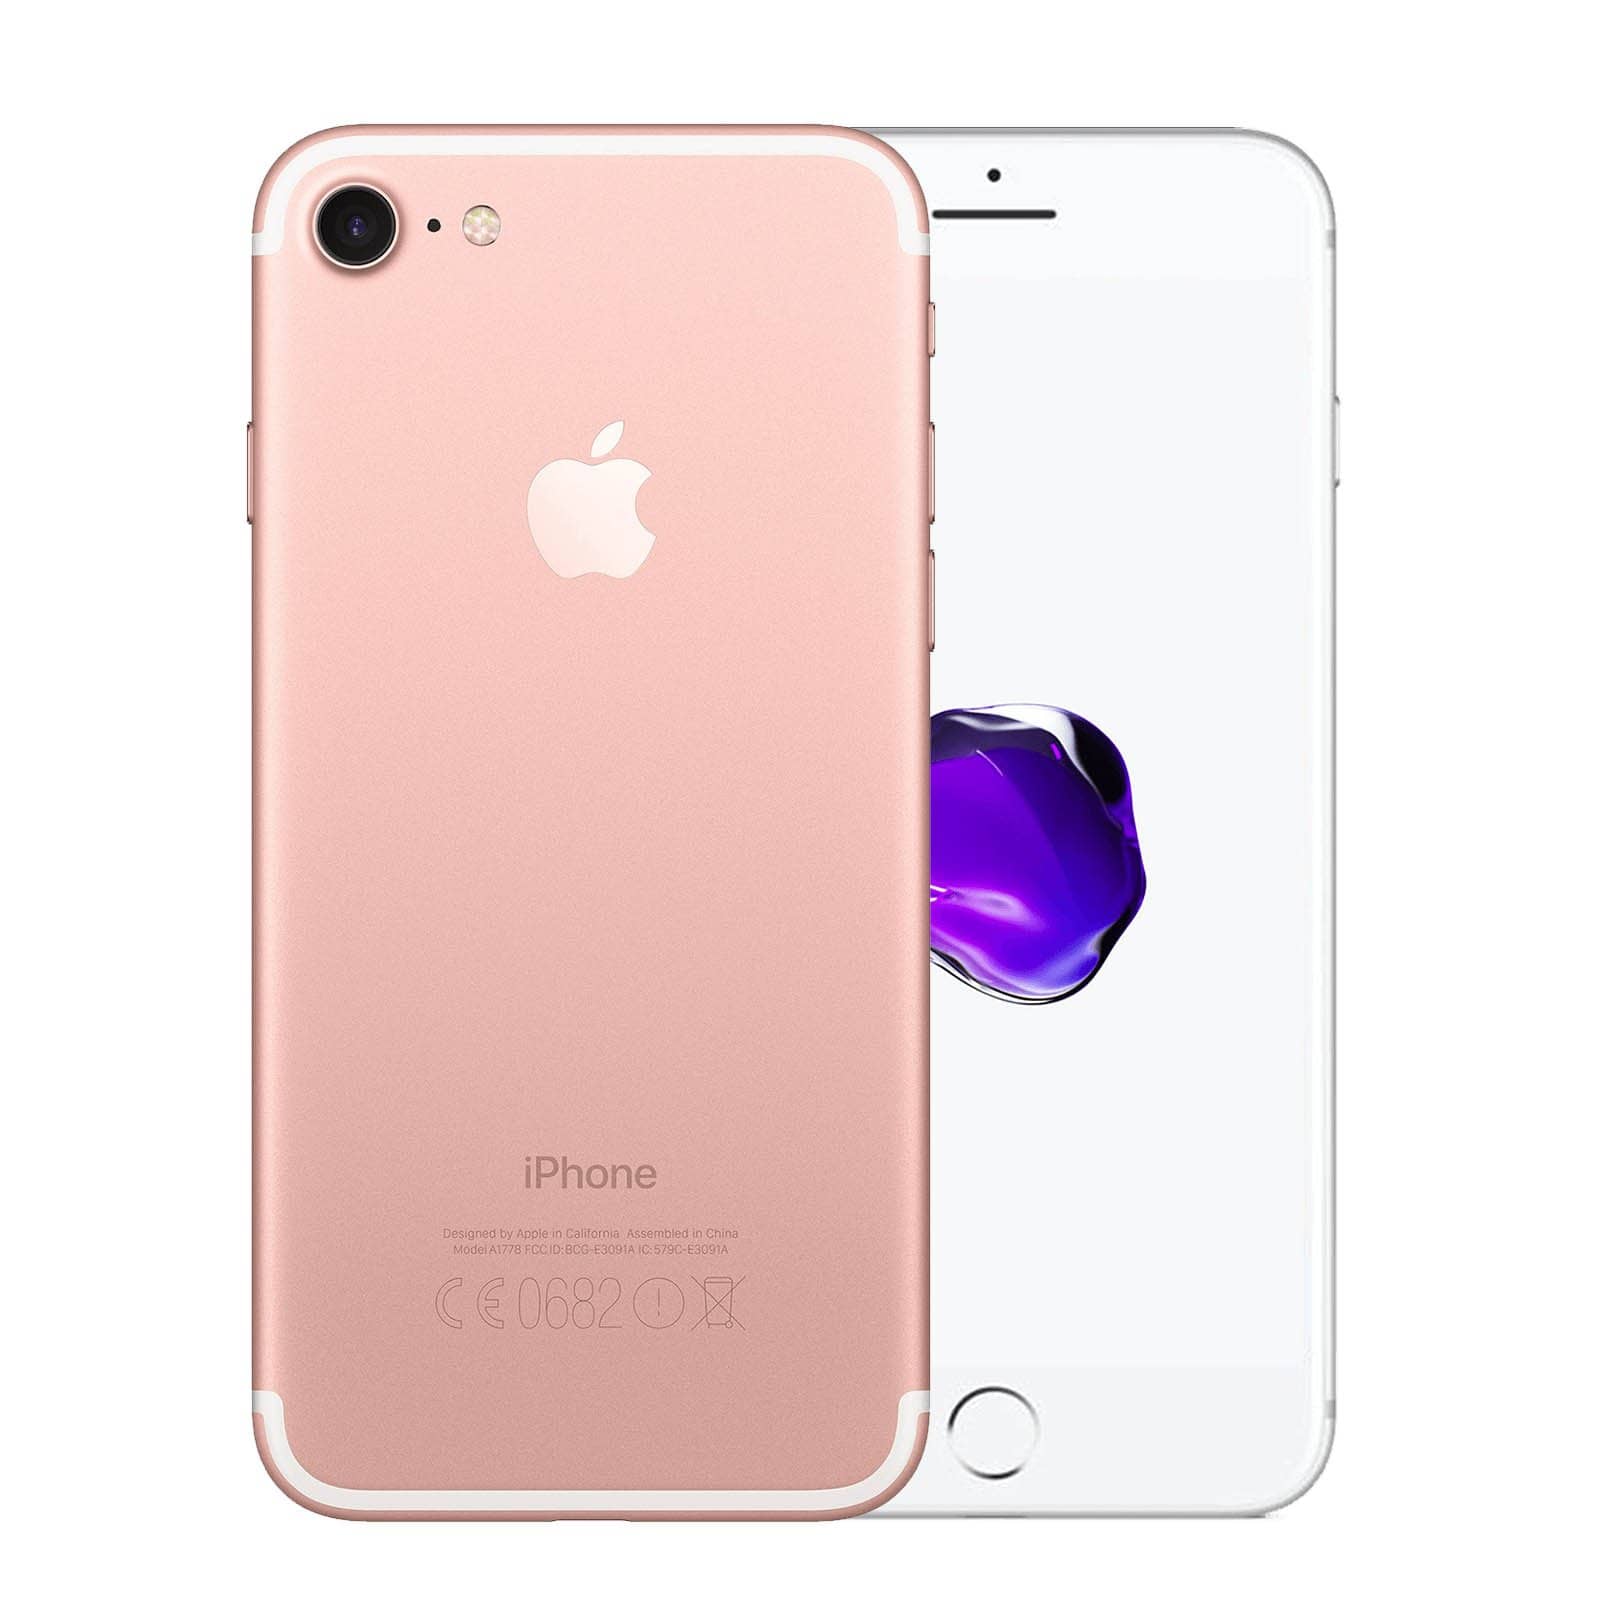 Apple iPhone 7 256GB Rose Gold Very Good - Unlocked 256GB Rose Gold Very Good